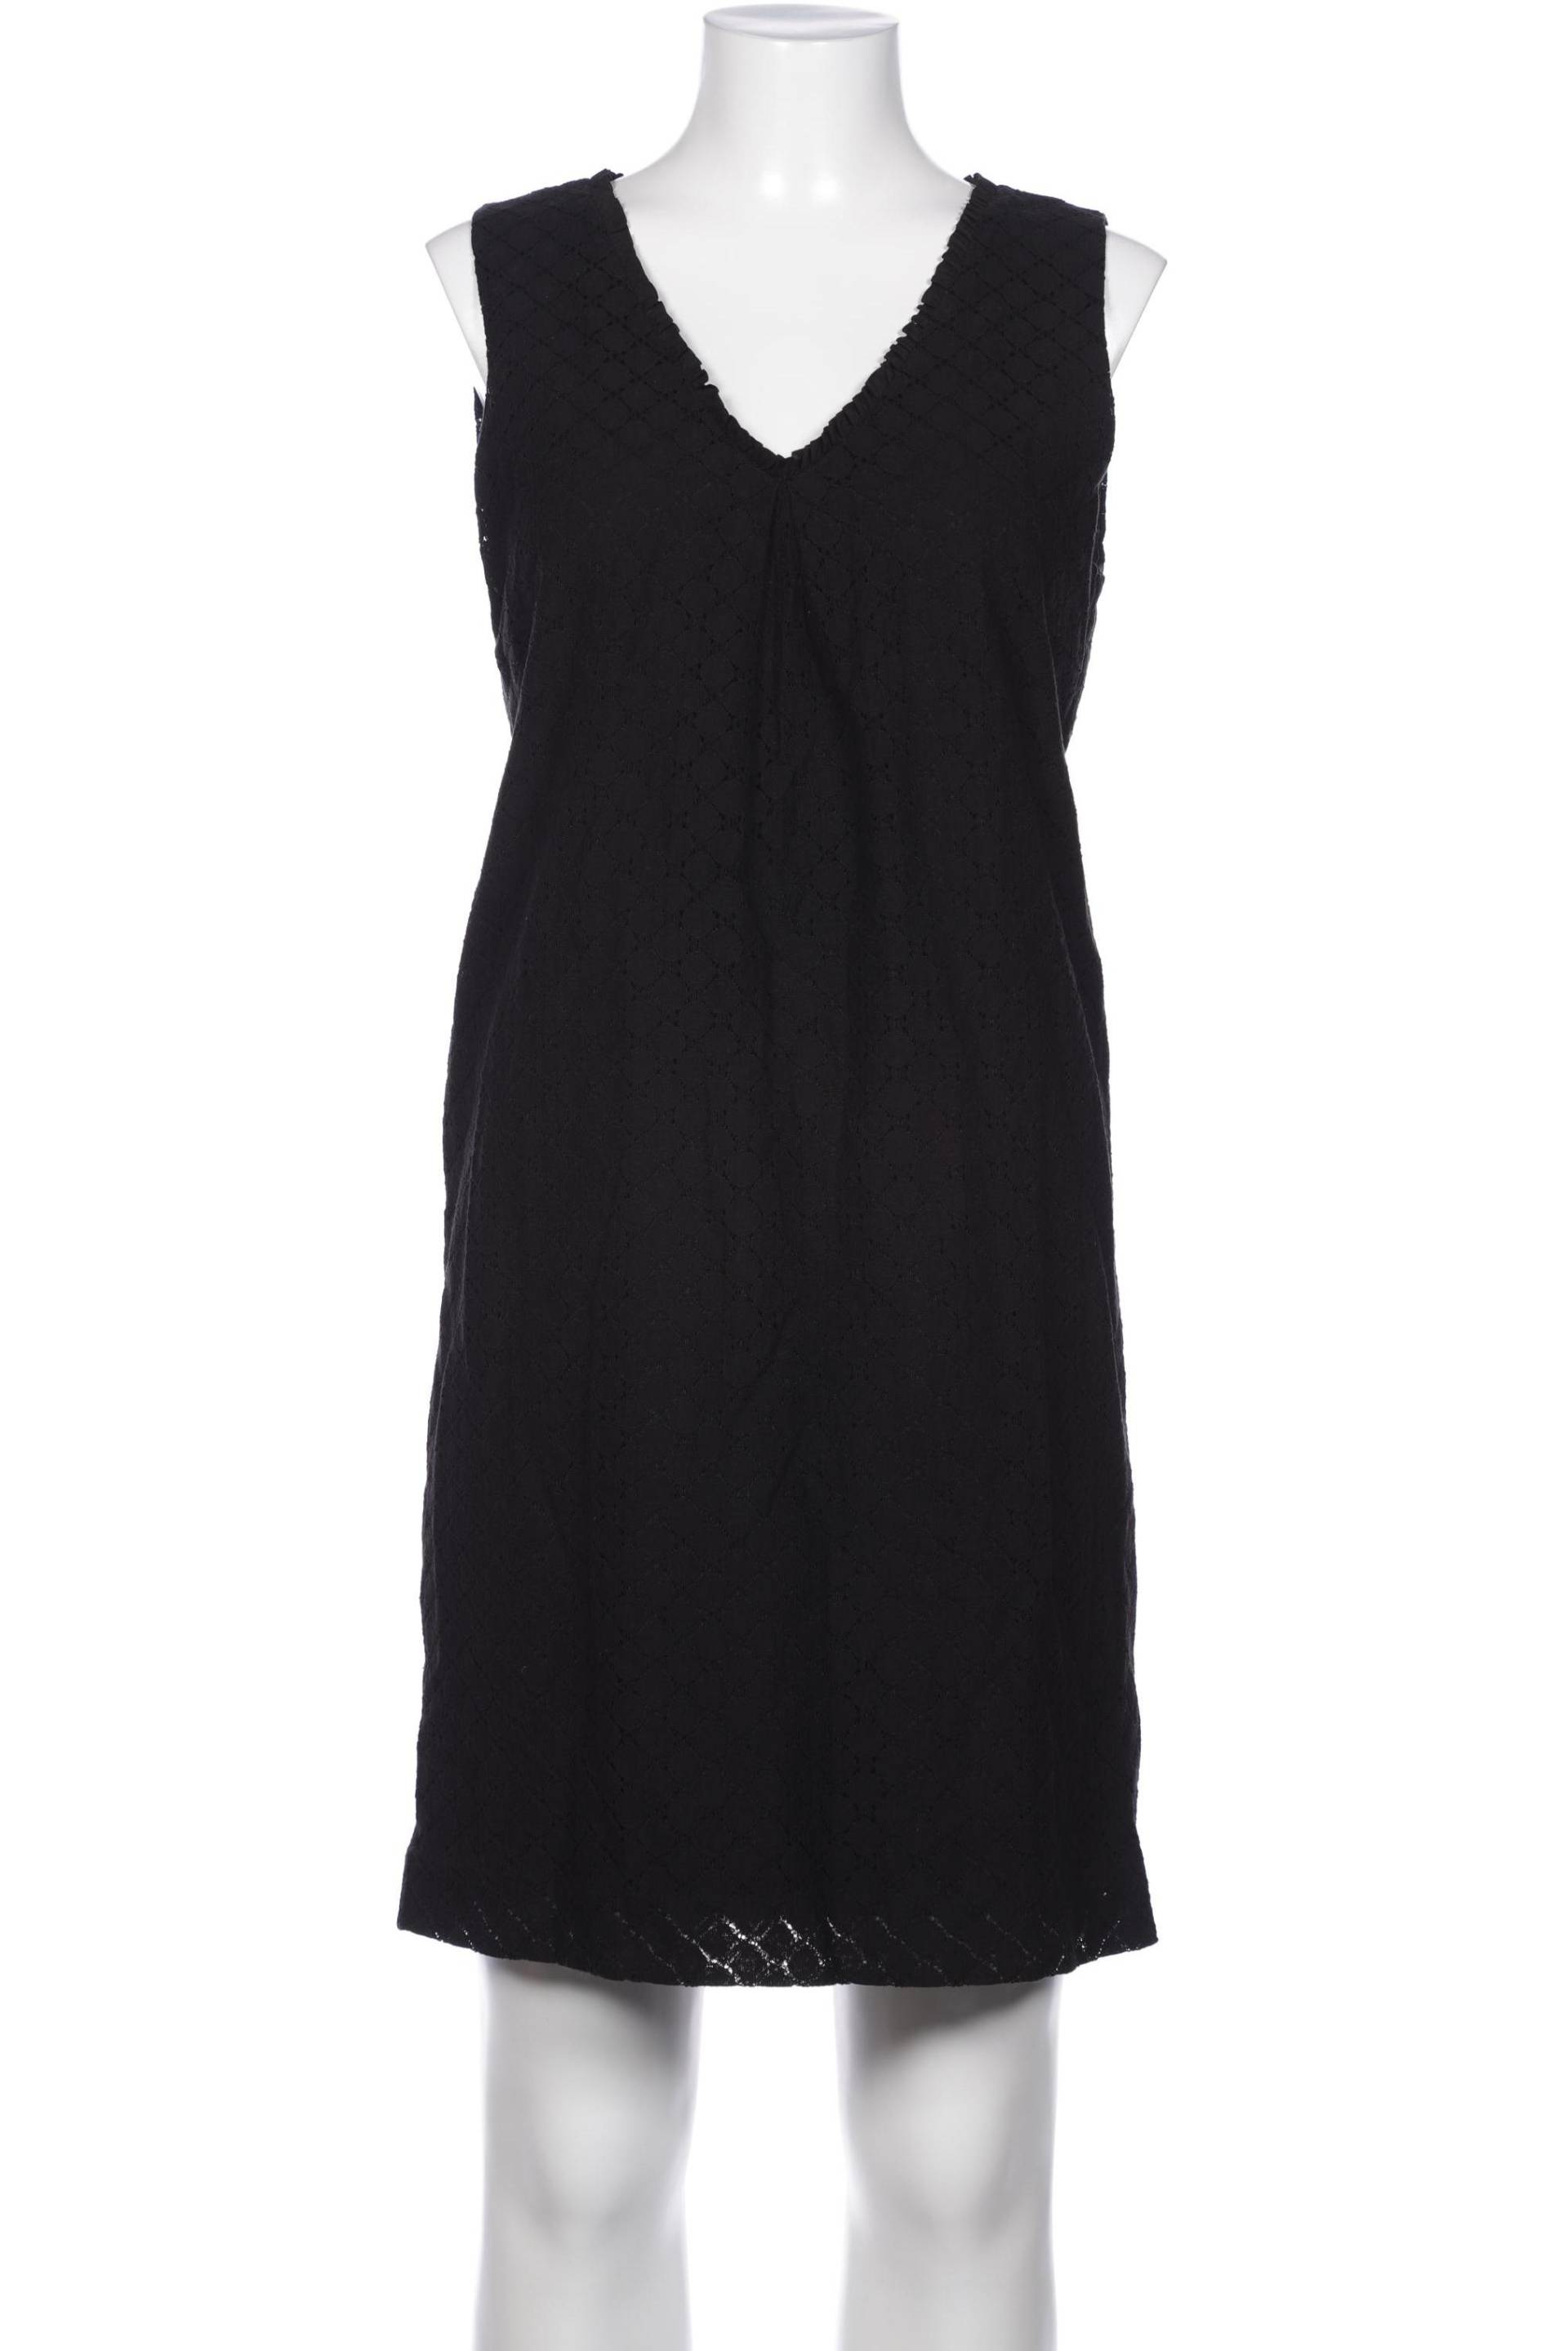 Rosemunde Damen Kleid, schwarz, Gr. 40 von Rosemunde